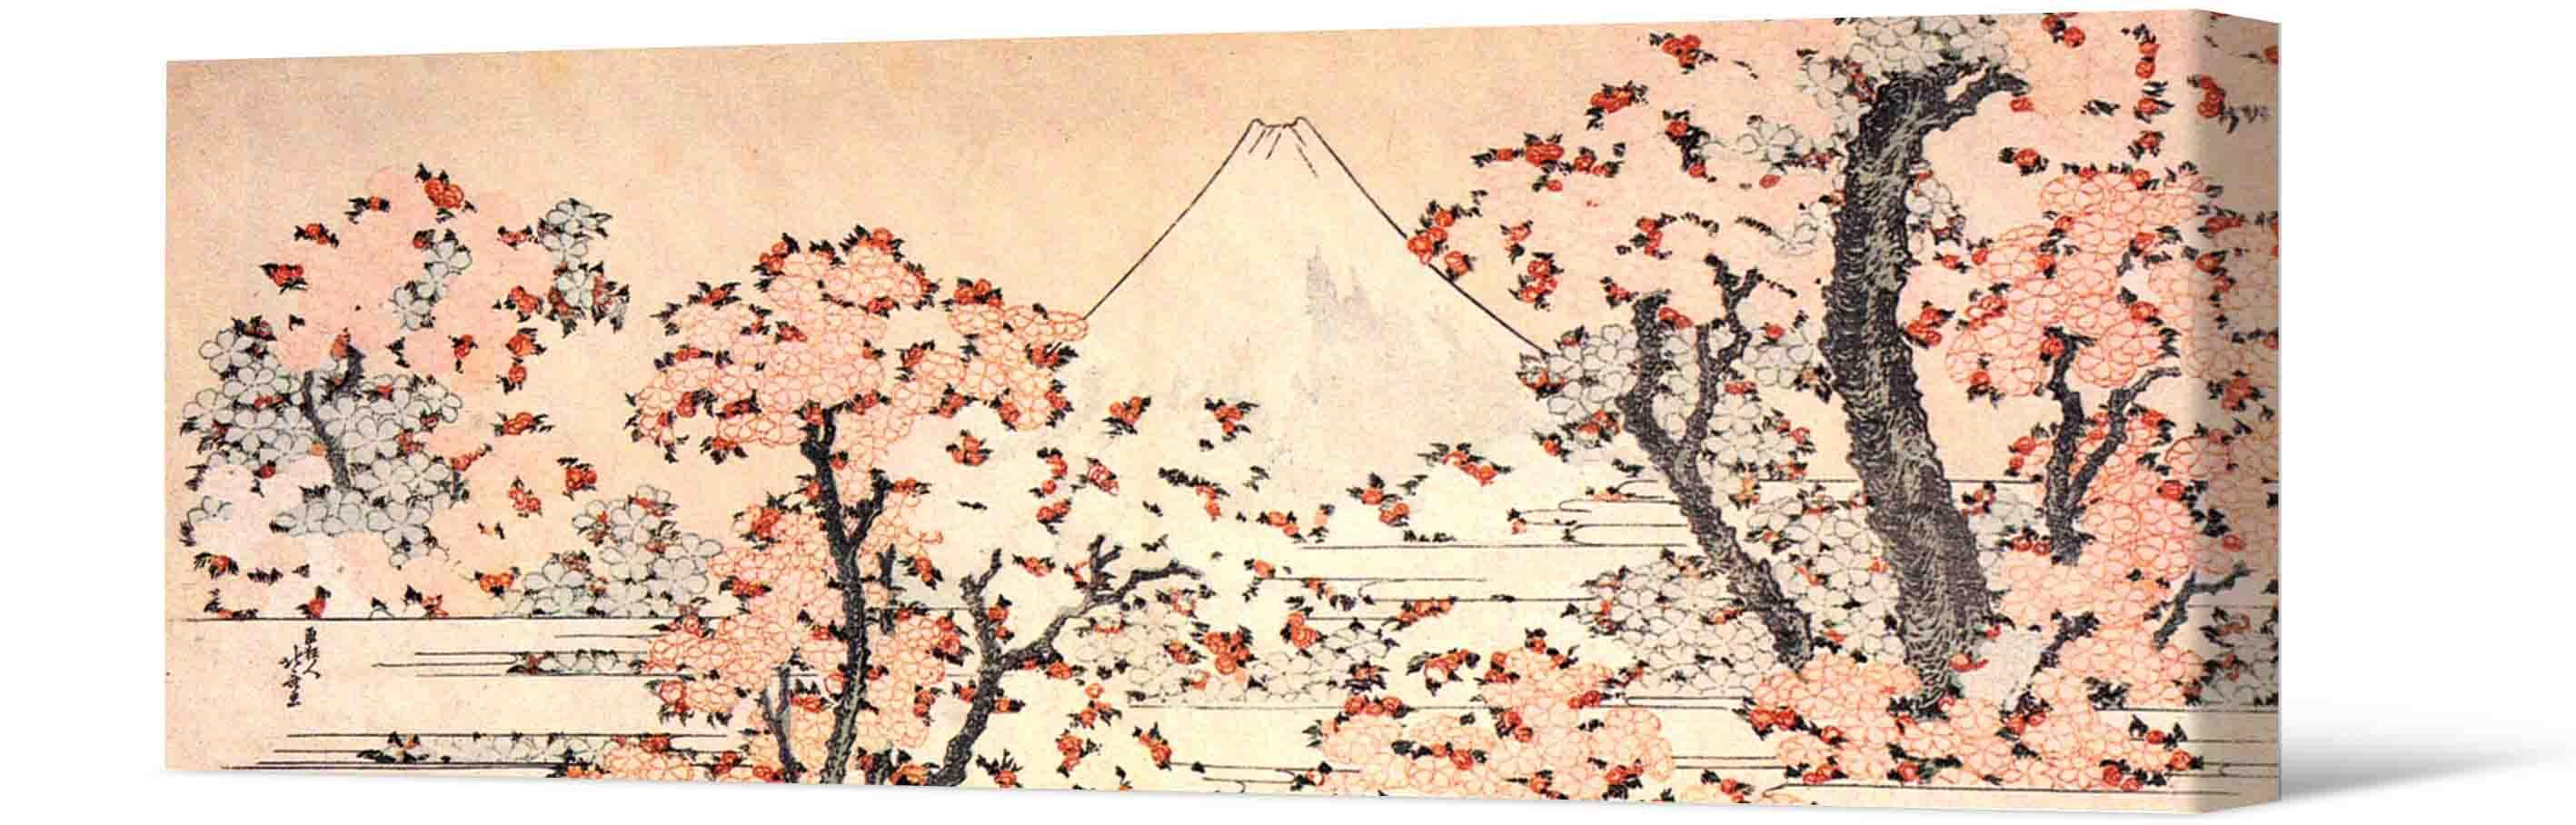 Картинка Фотокартина - деревья сакуры и вулкан 